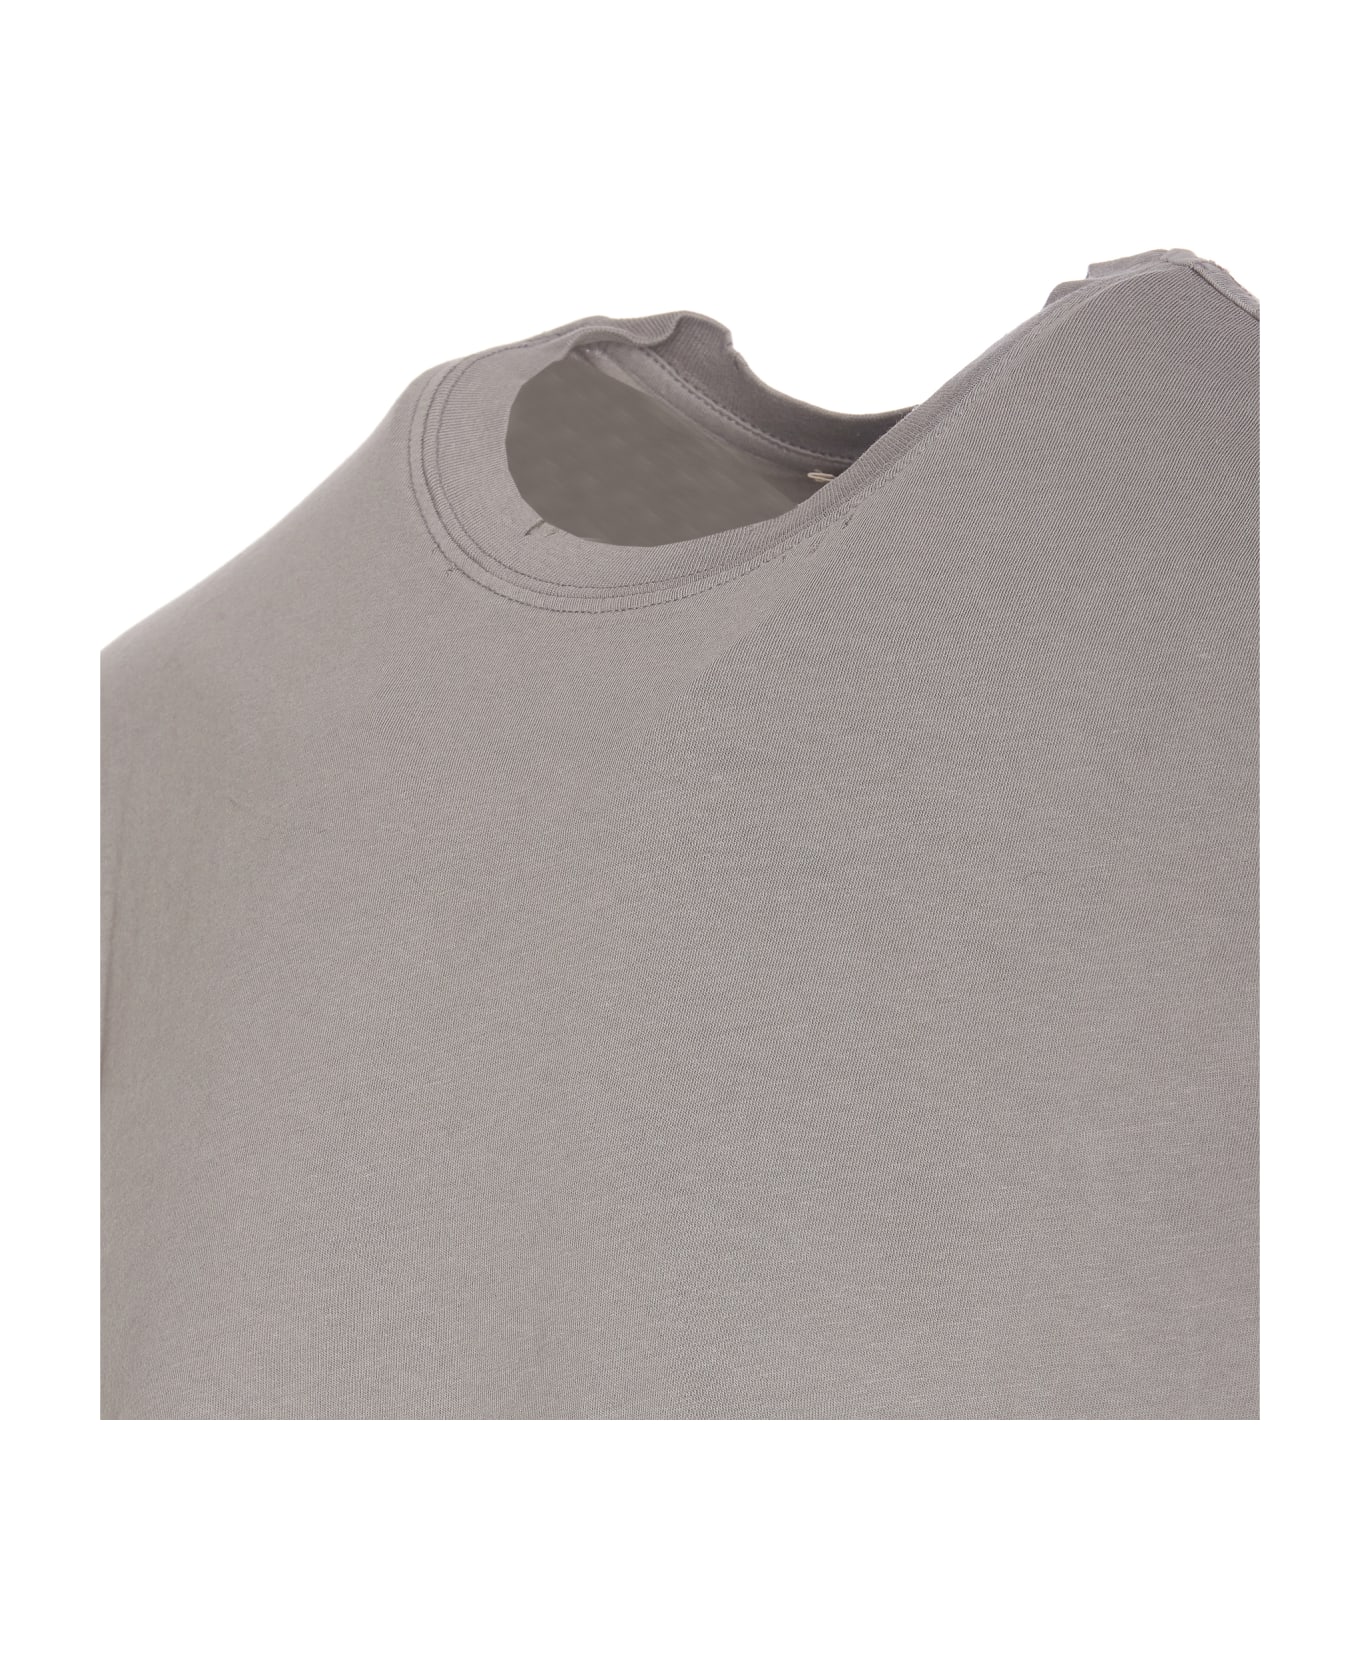 Zadig & Voltaire Jimmy Destroy T-shirt - Grey